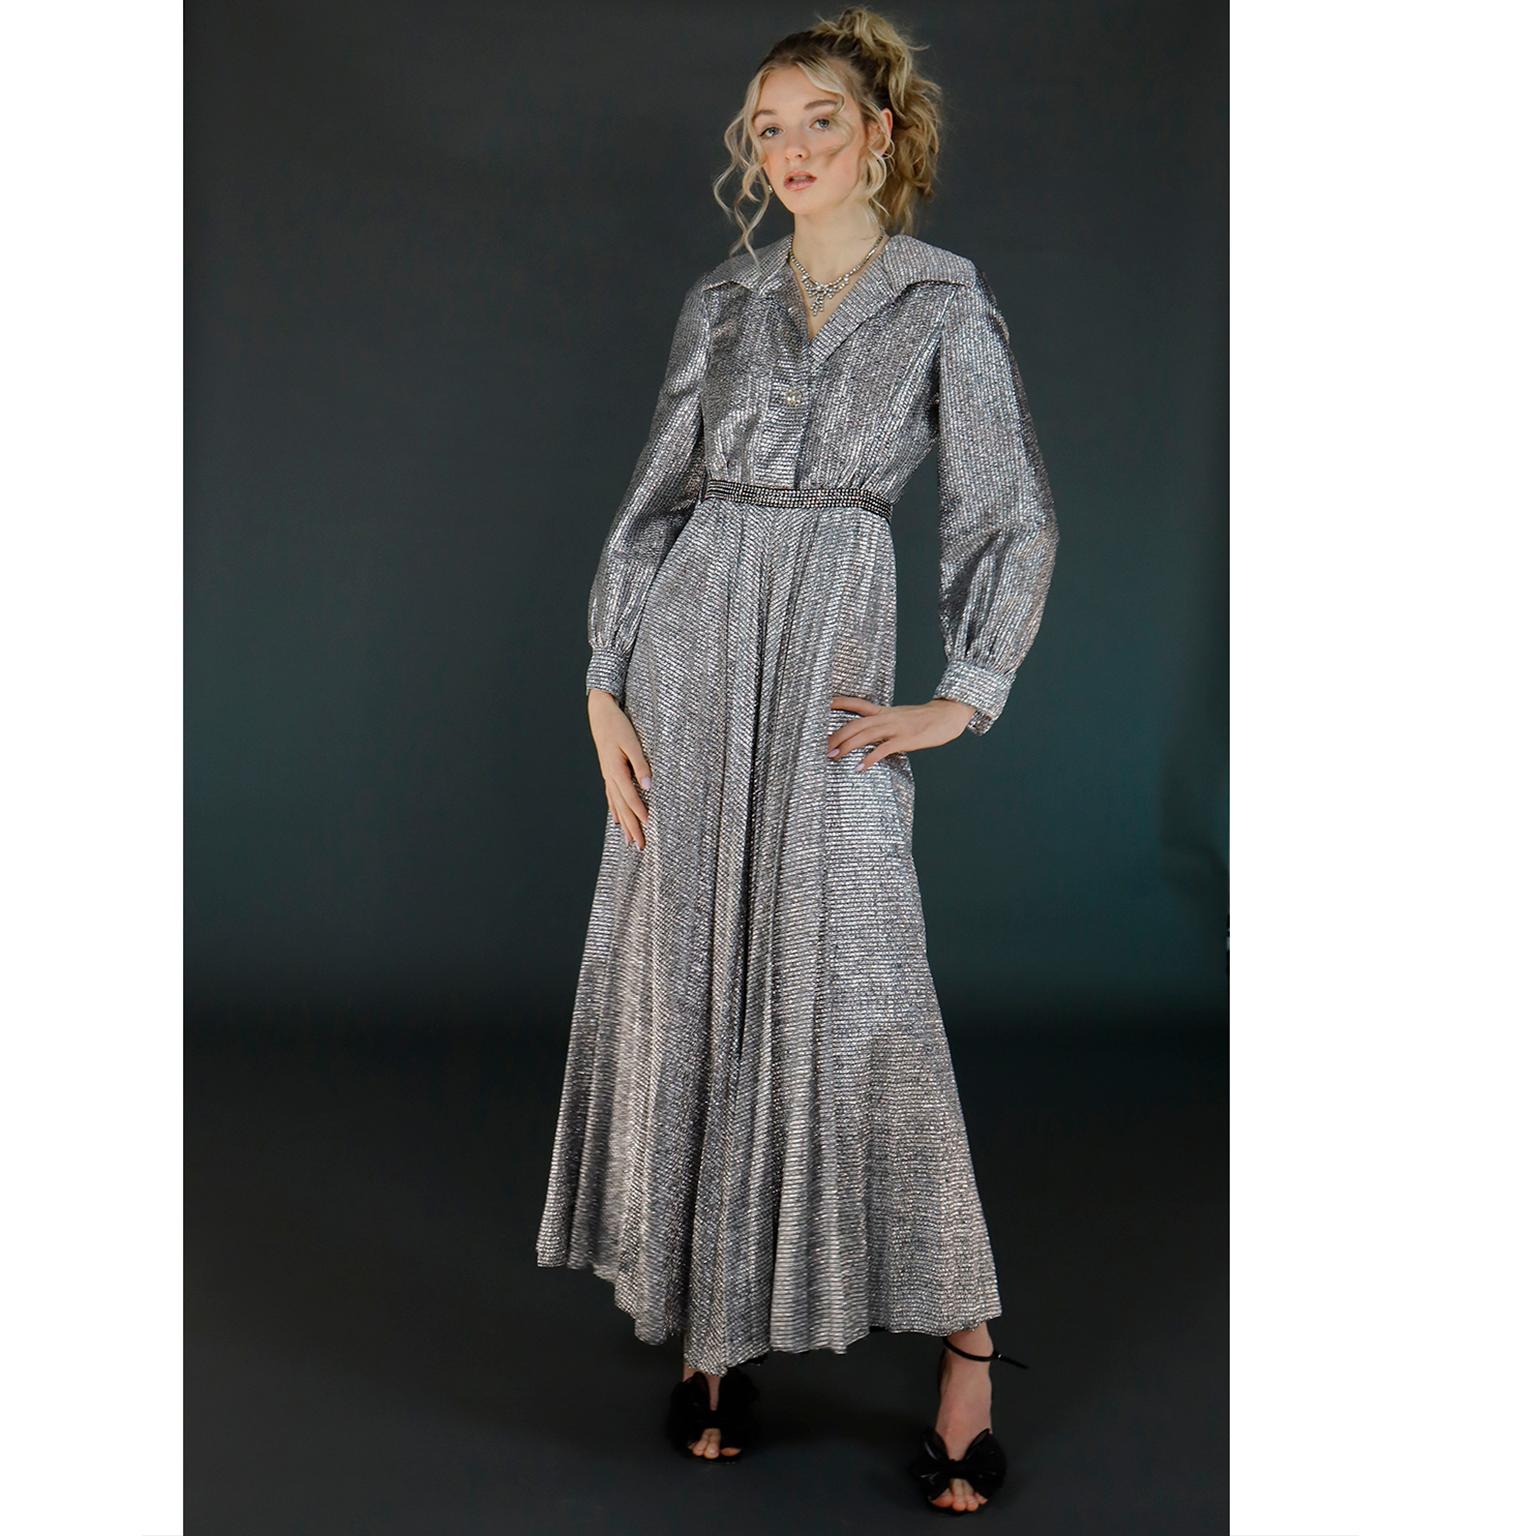 Women's Vintage 1960s 1970s Silver Sparkle Palazzo Jumpsuit Evening Dress Alternative For Sale